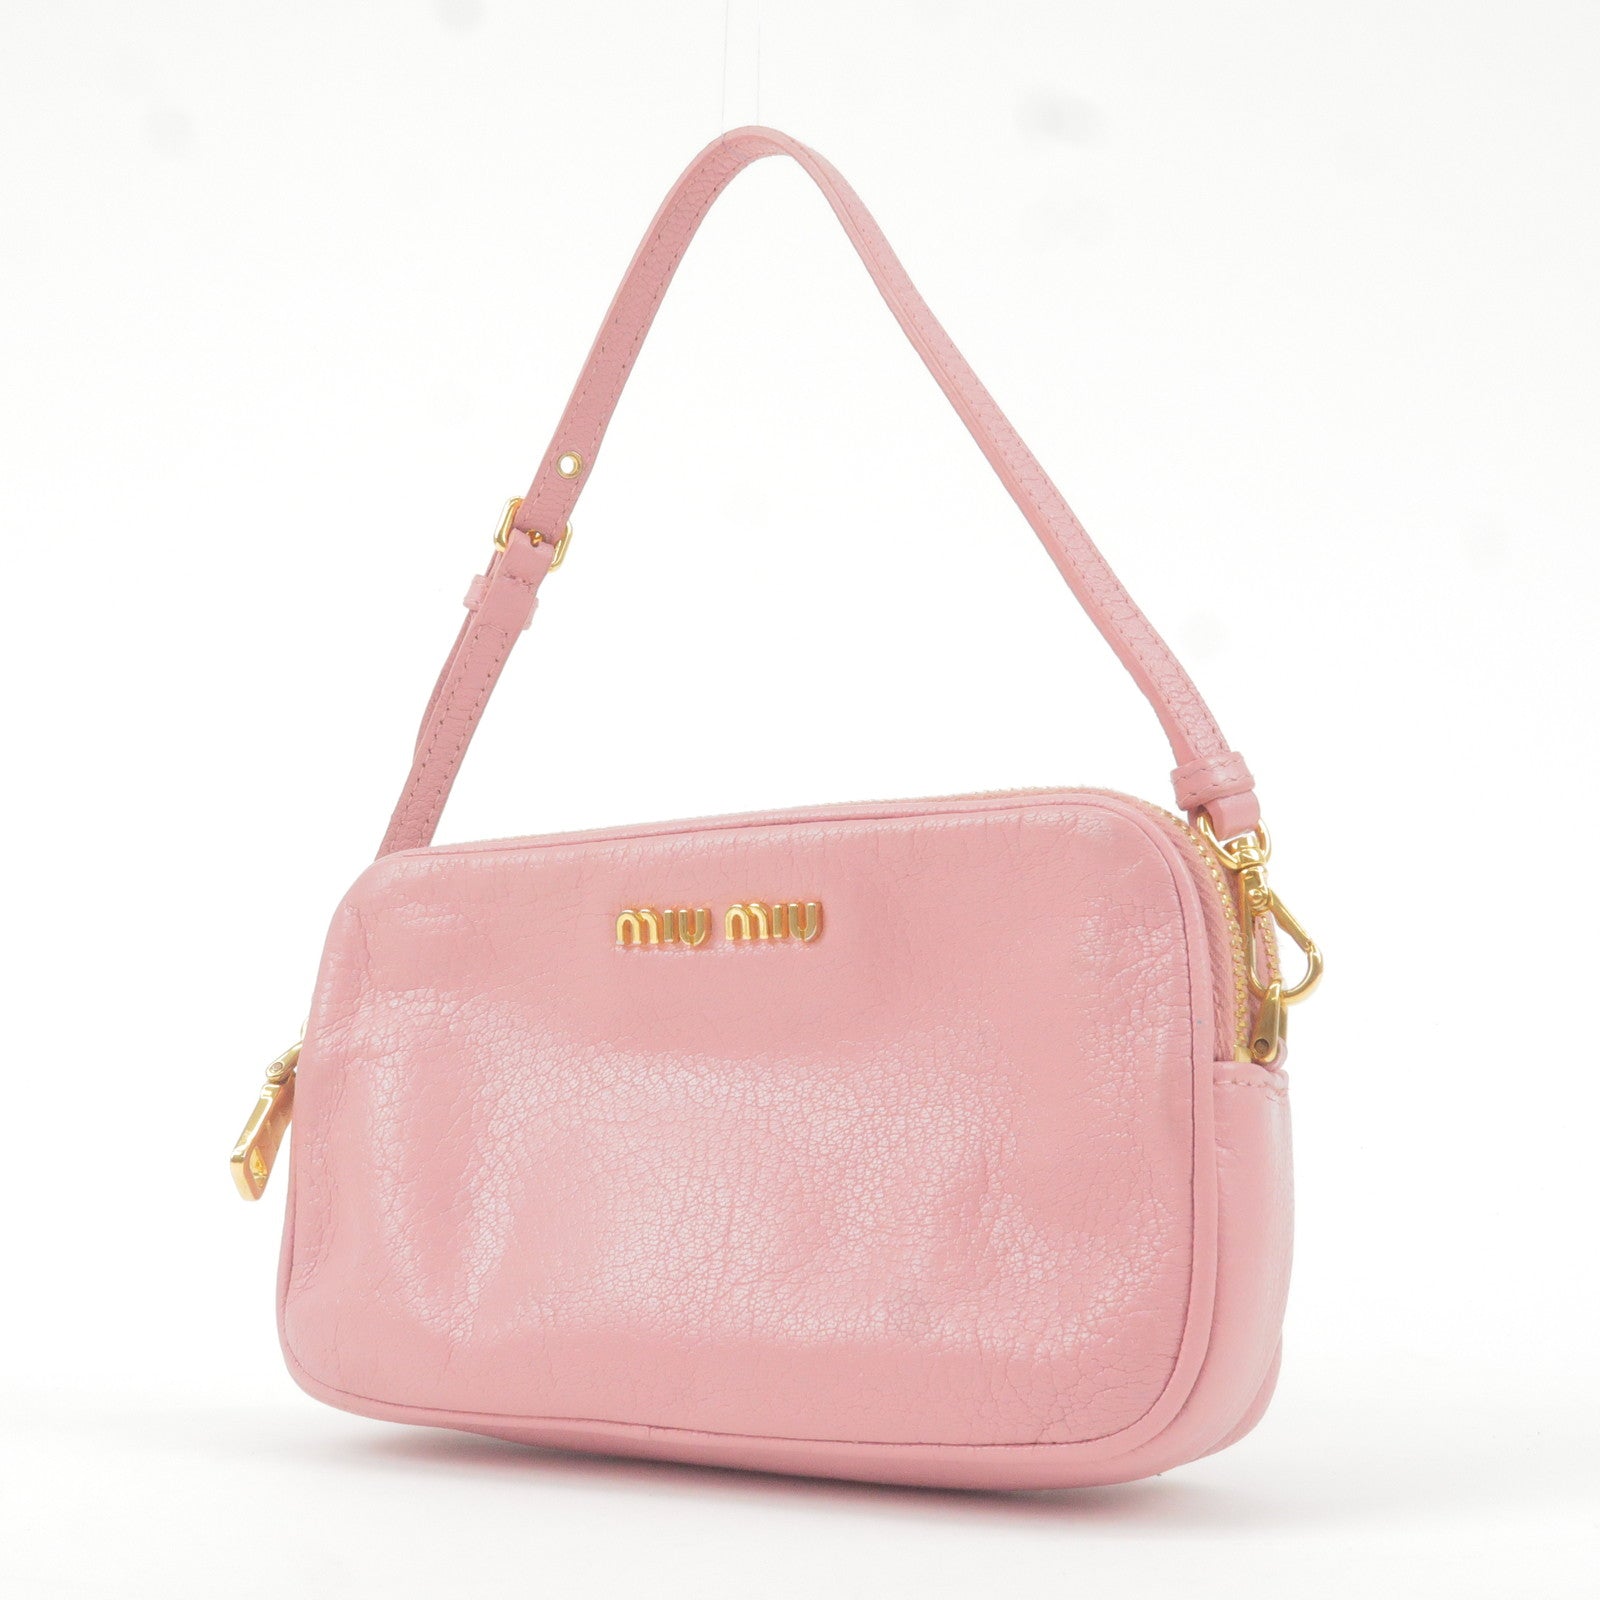 Auth Miu miu Handbag 2Way Shoulder Bag Pink Beige Leather Bow Ribbon Italy